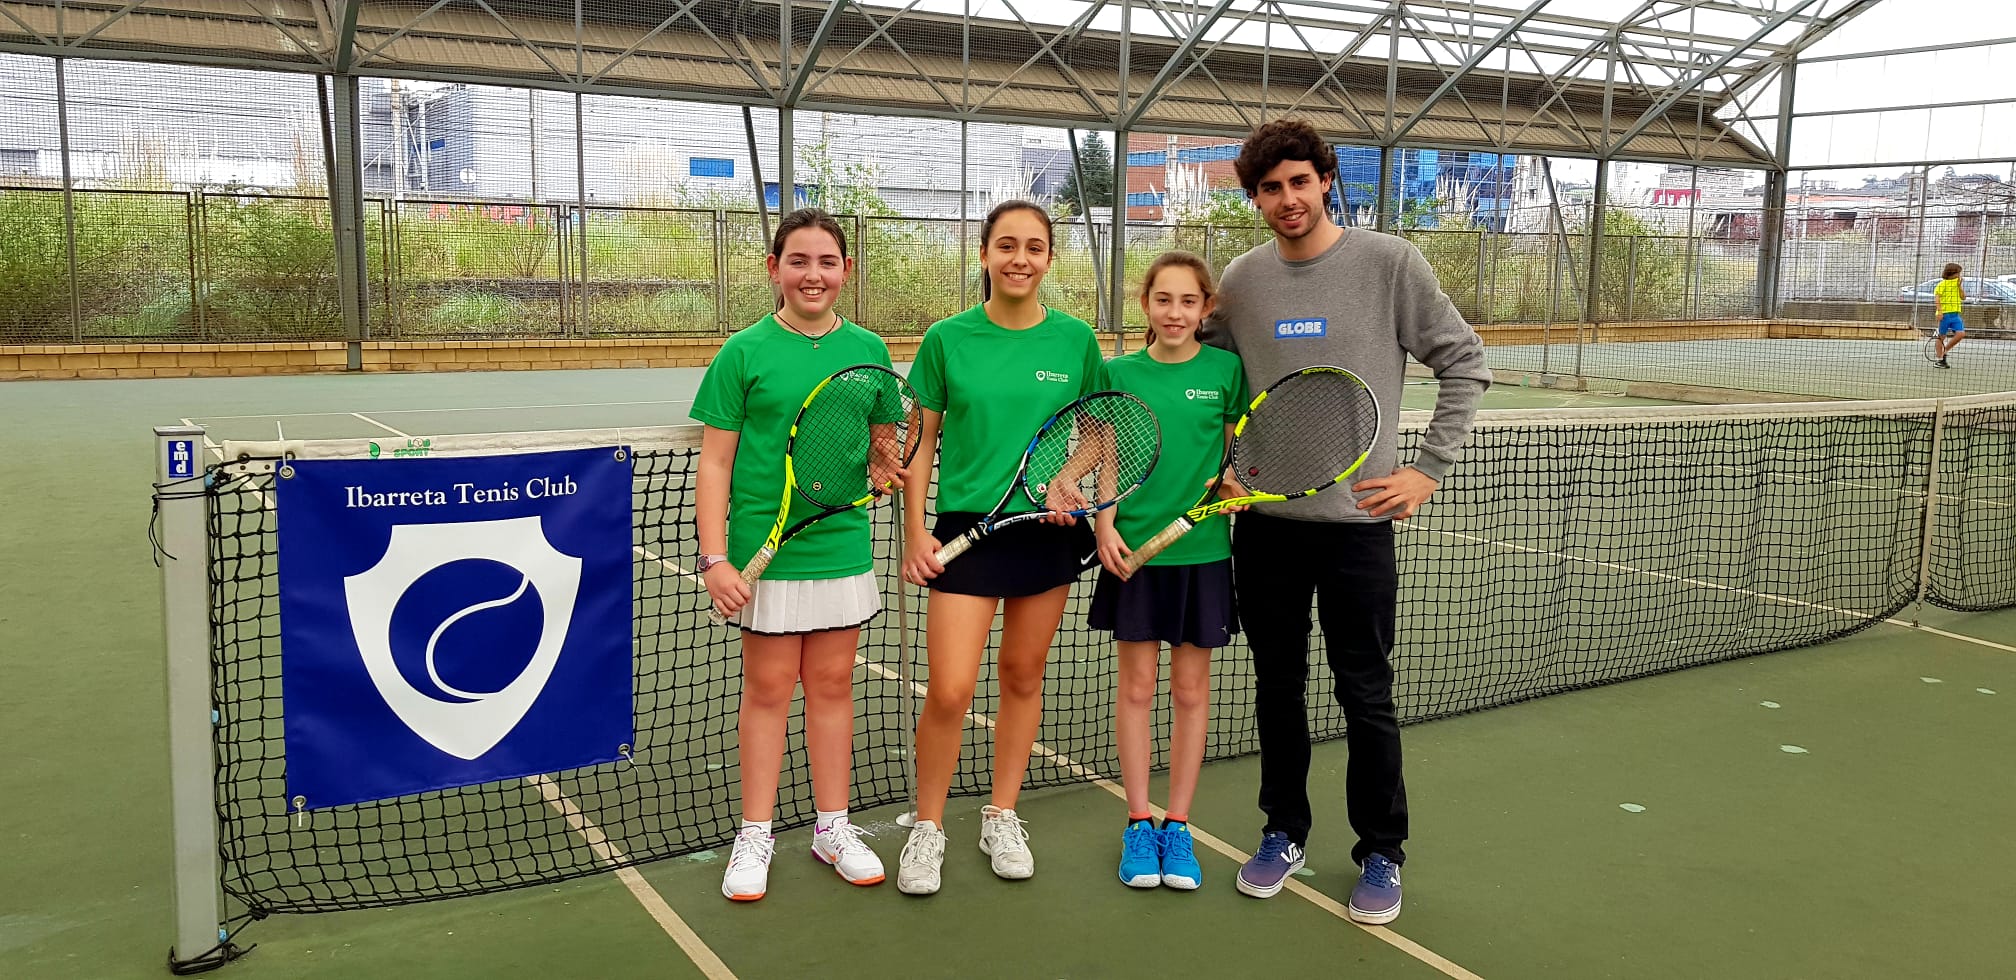  El equipo infantil femenino de Ibarreta Tenis Club compuesto por Janire Mota, Uxúe Bernal y Paula López de Ipiña